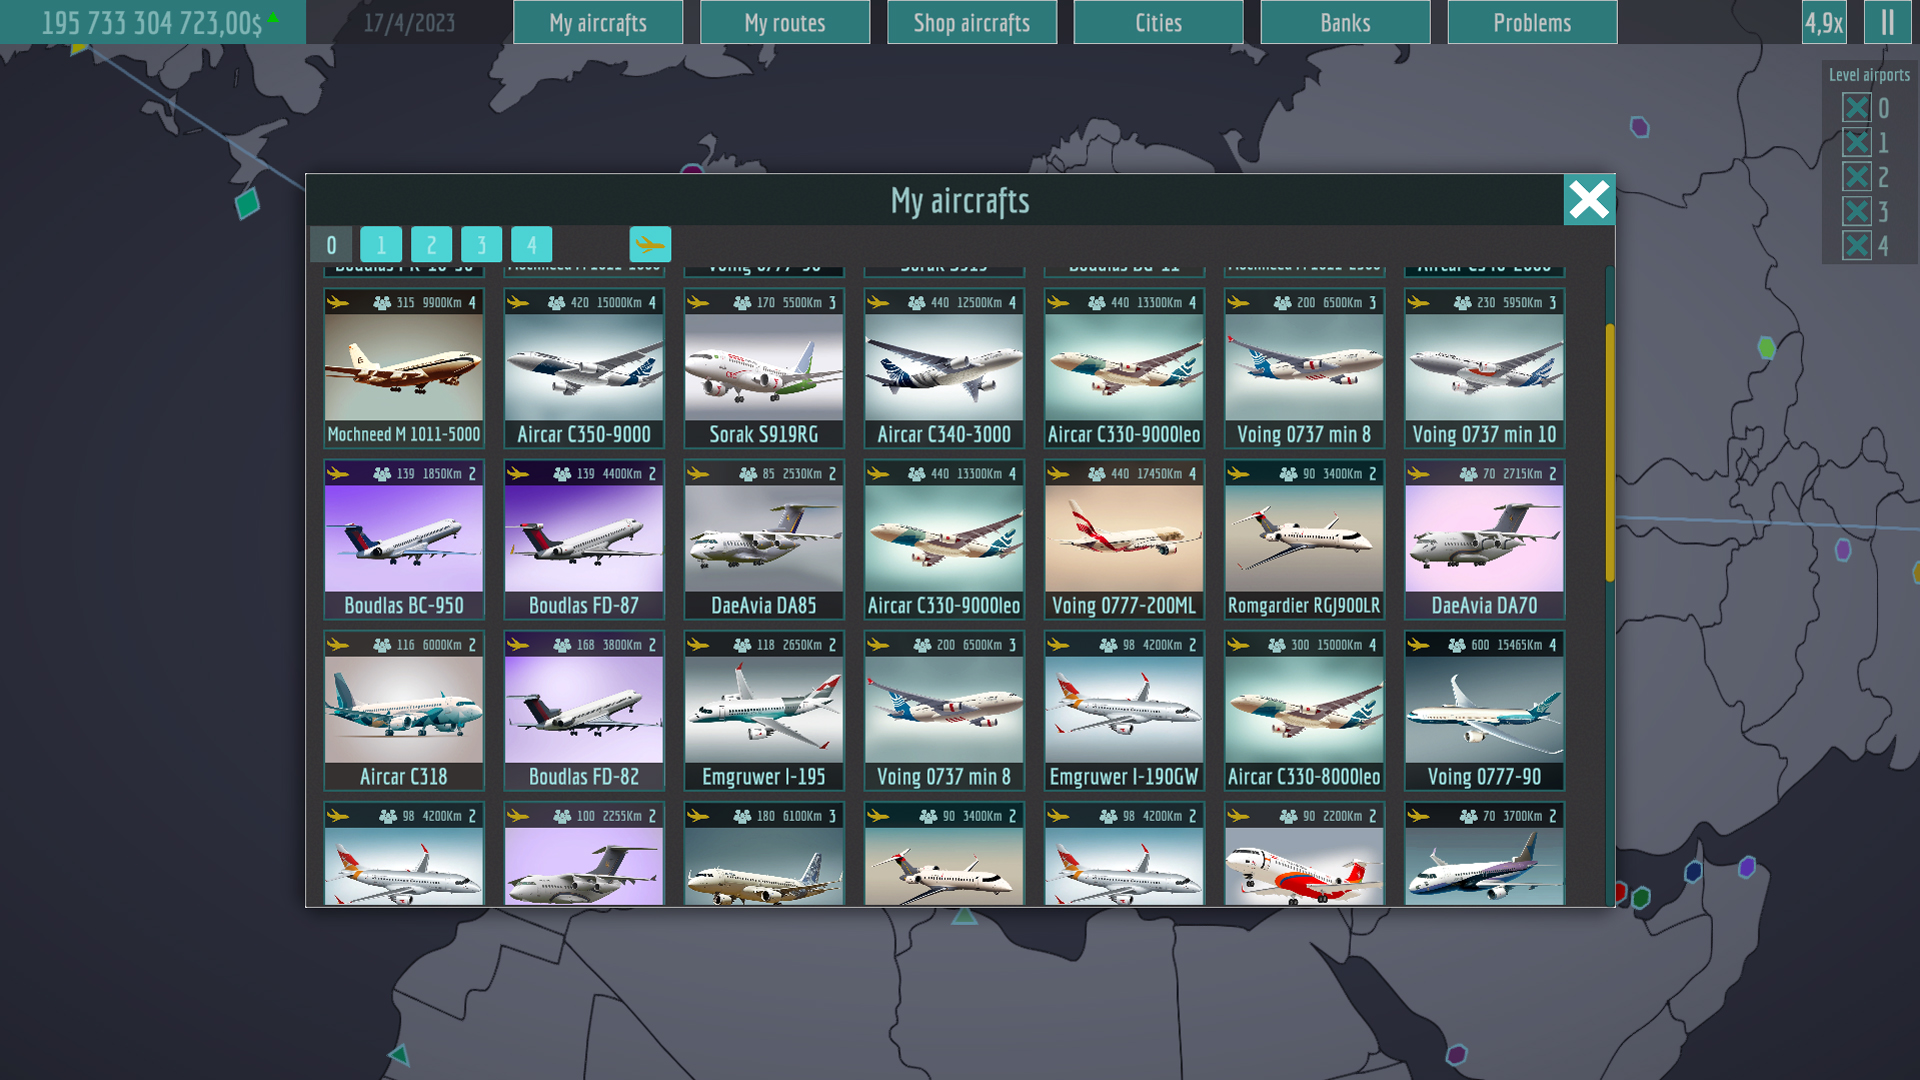 Avia corporation - Android game screenshots.